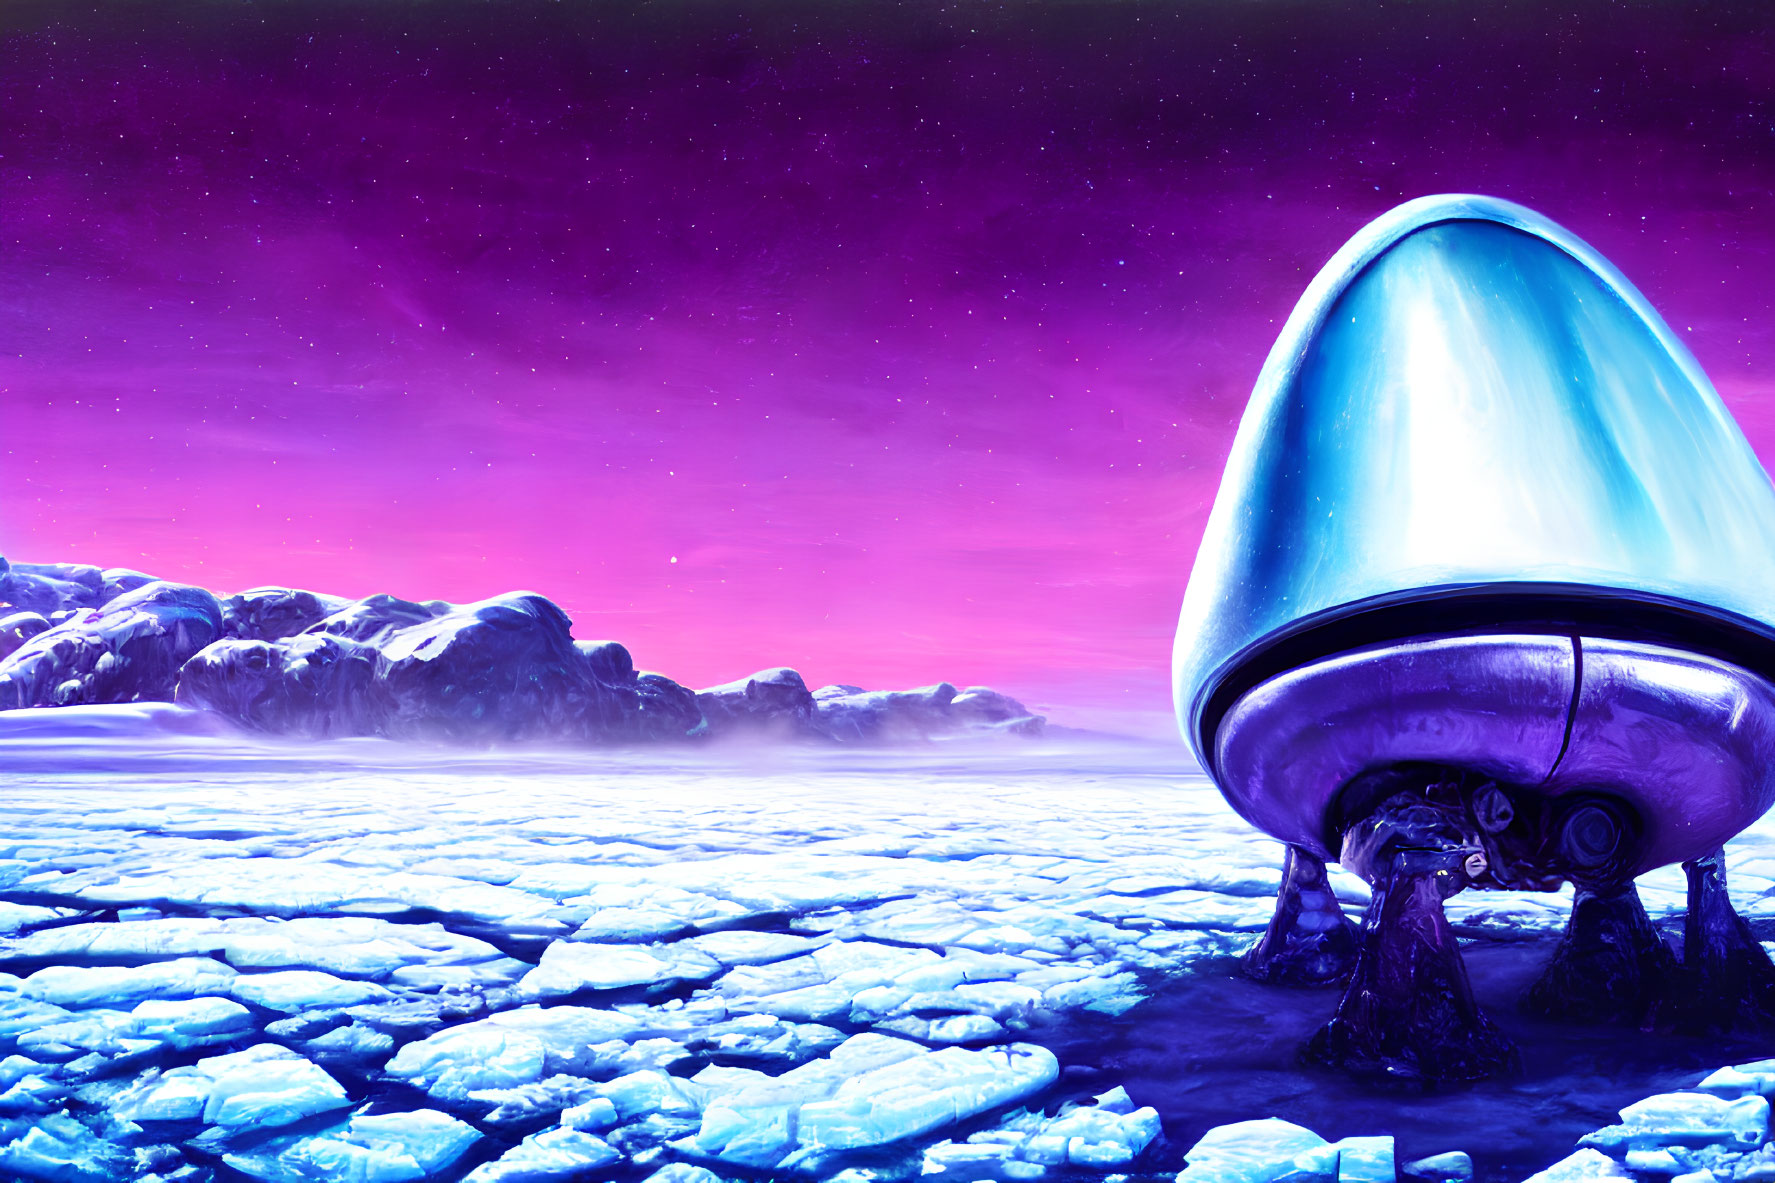 Futuristic spaceship on cracked icy alien terrain under purple sky